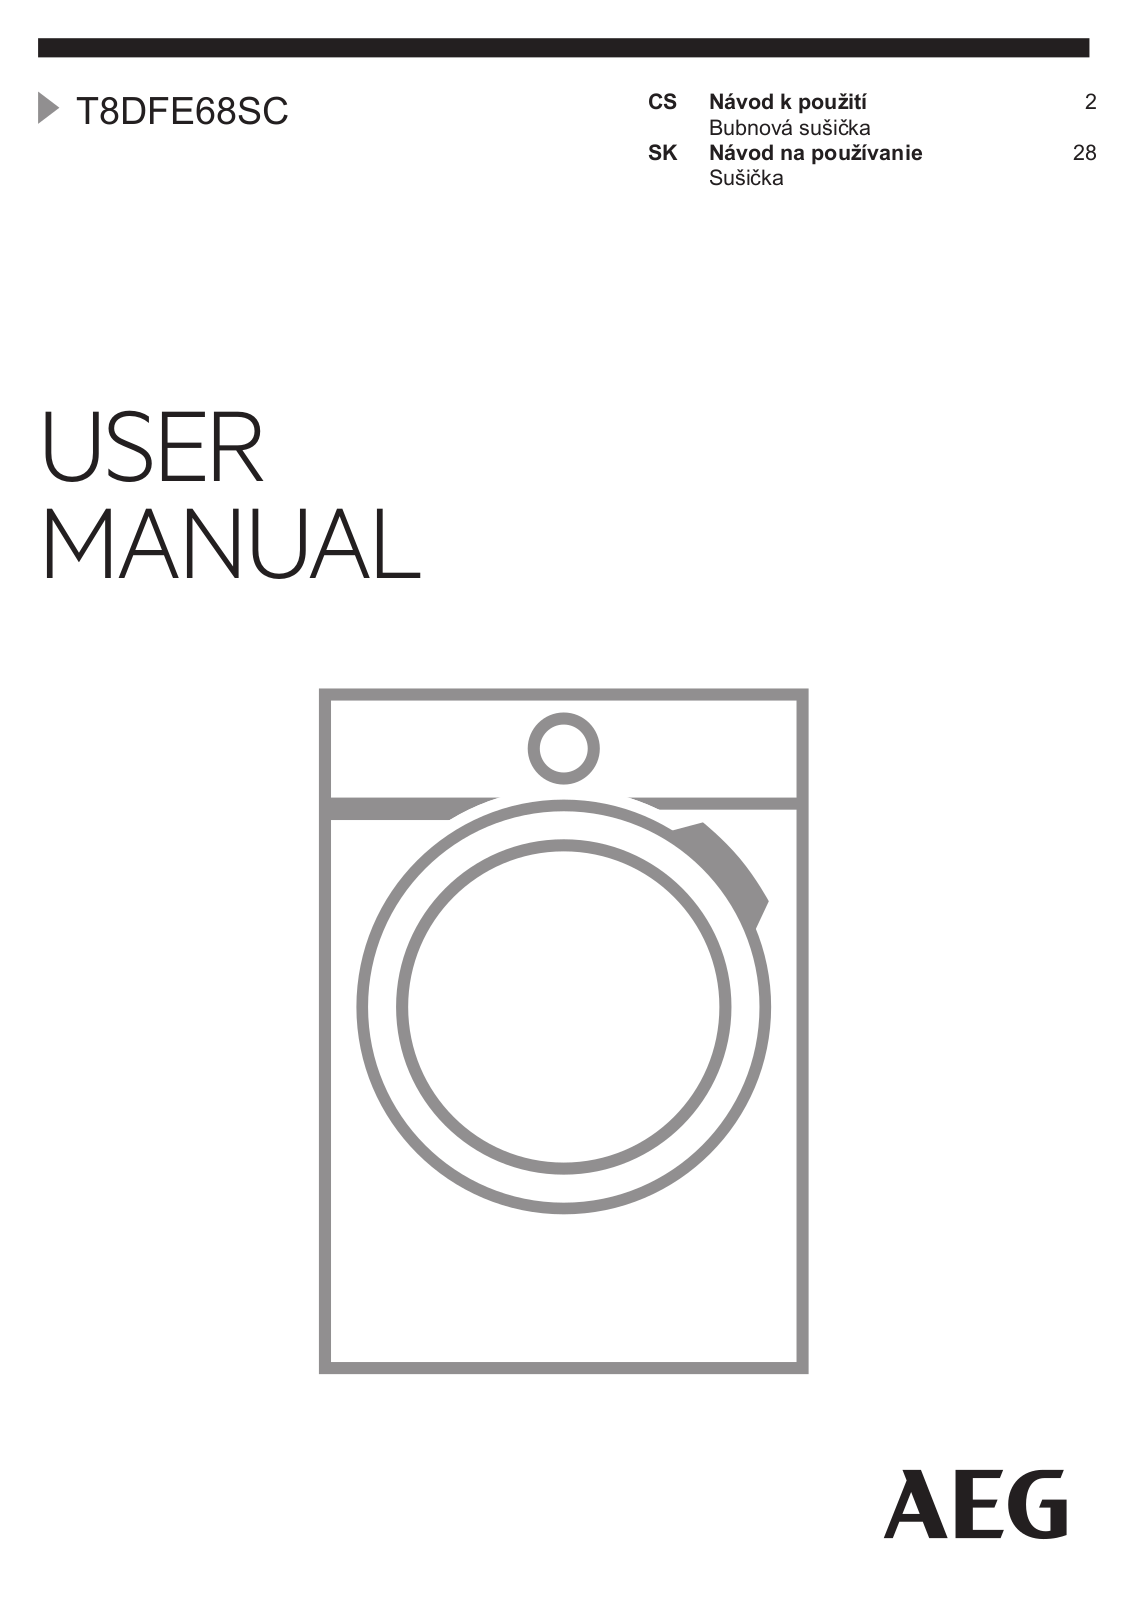 AEG T8DFE68SC User Manual